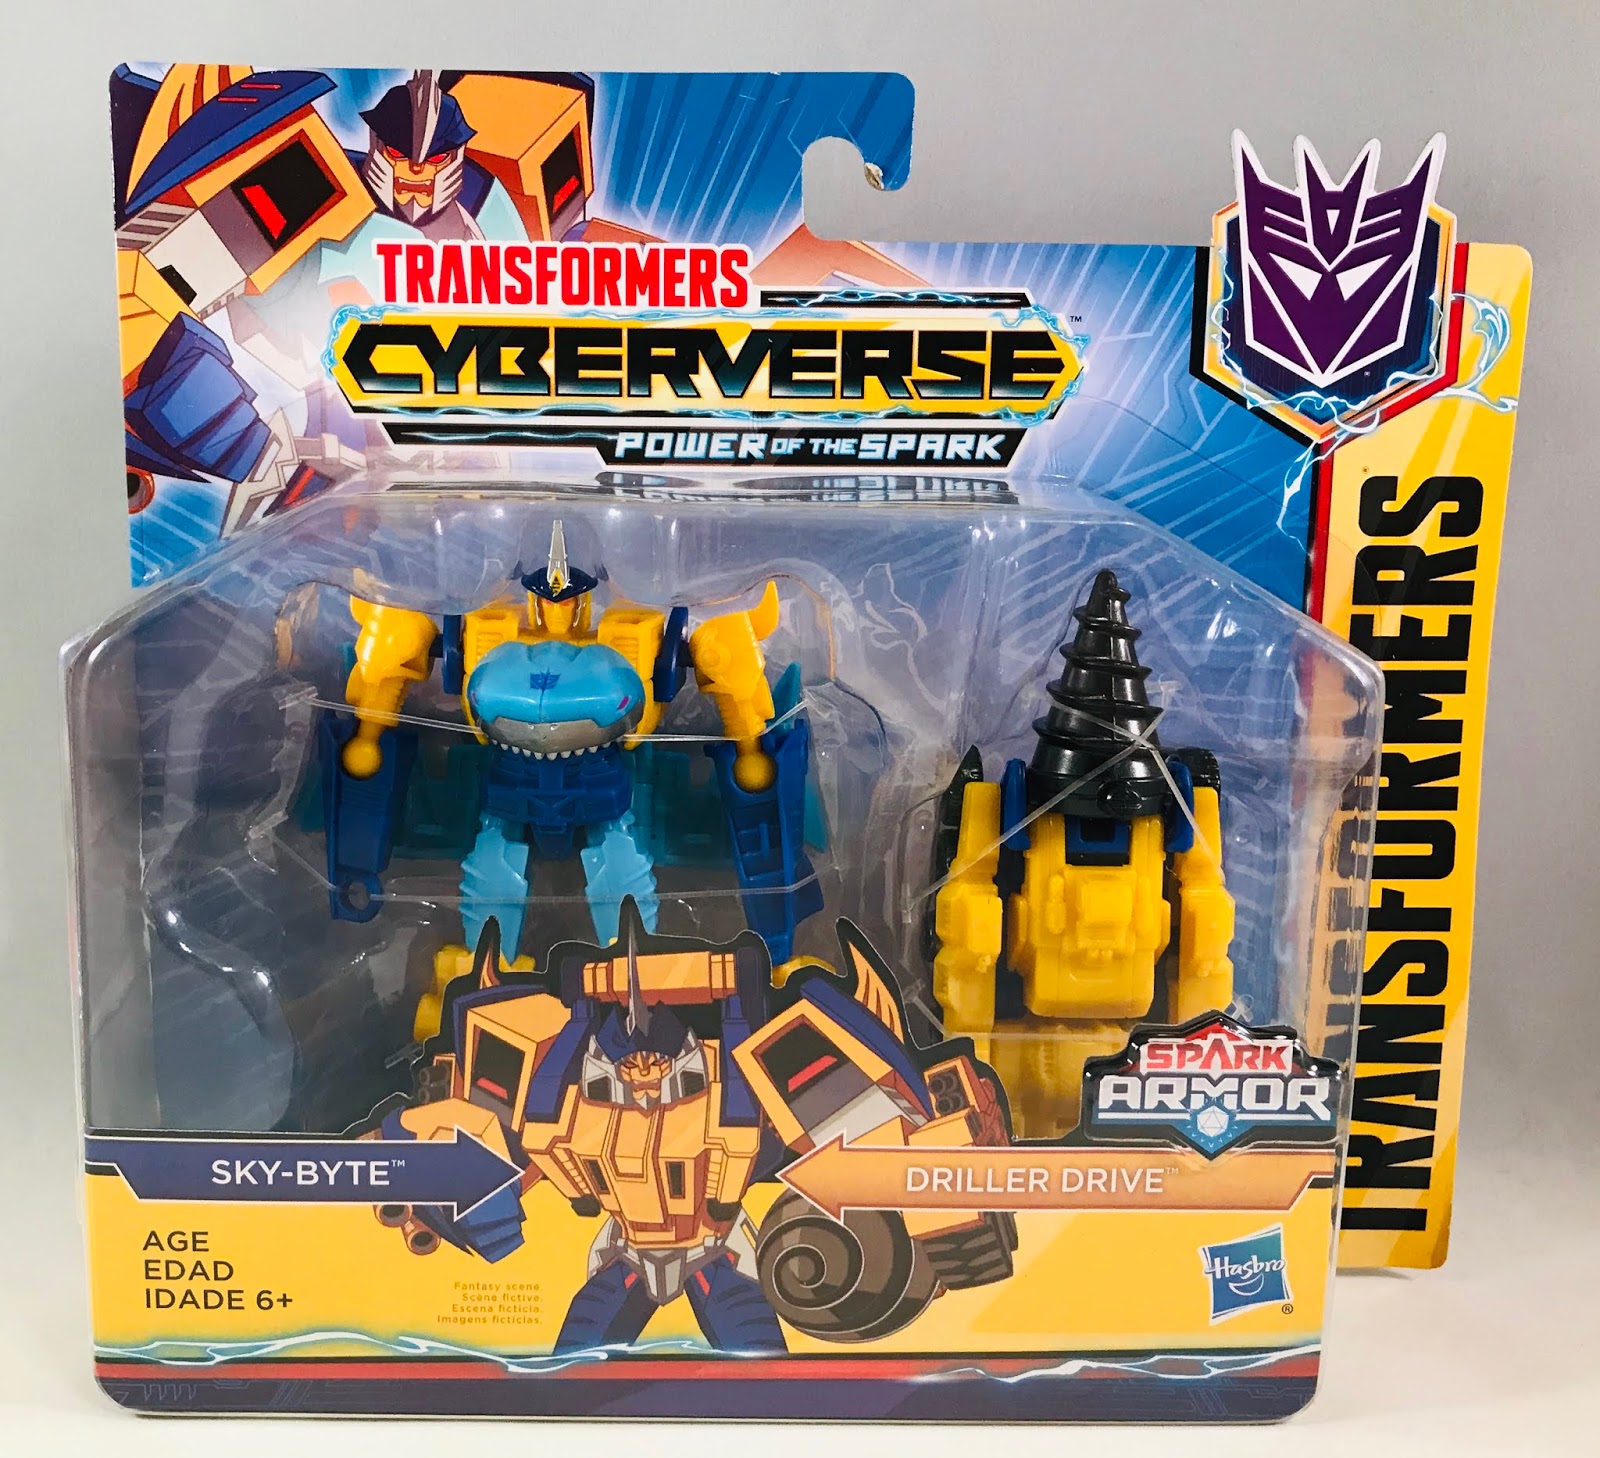 Transformers sky byte. Трансформеры Киберверс Скайбайт. Transformers Cyberverse Sky-byte. Transformers Cyberverse Sky-byte Toy. Трансформеры Hasbro Cyberverse.